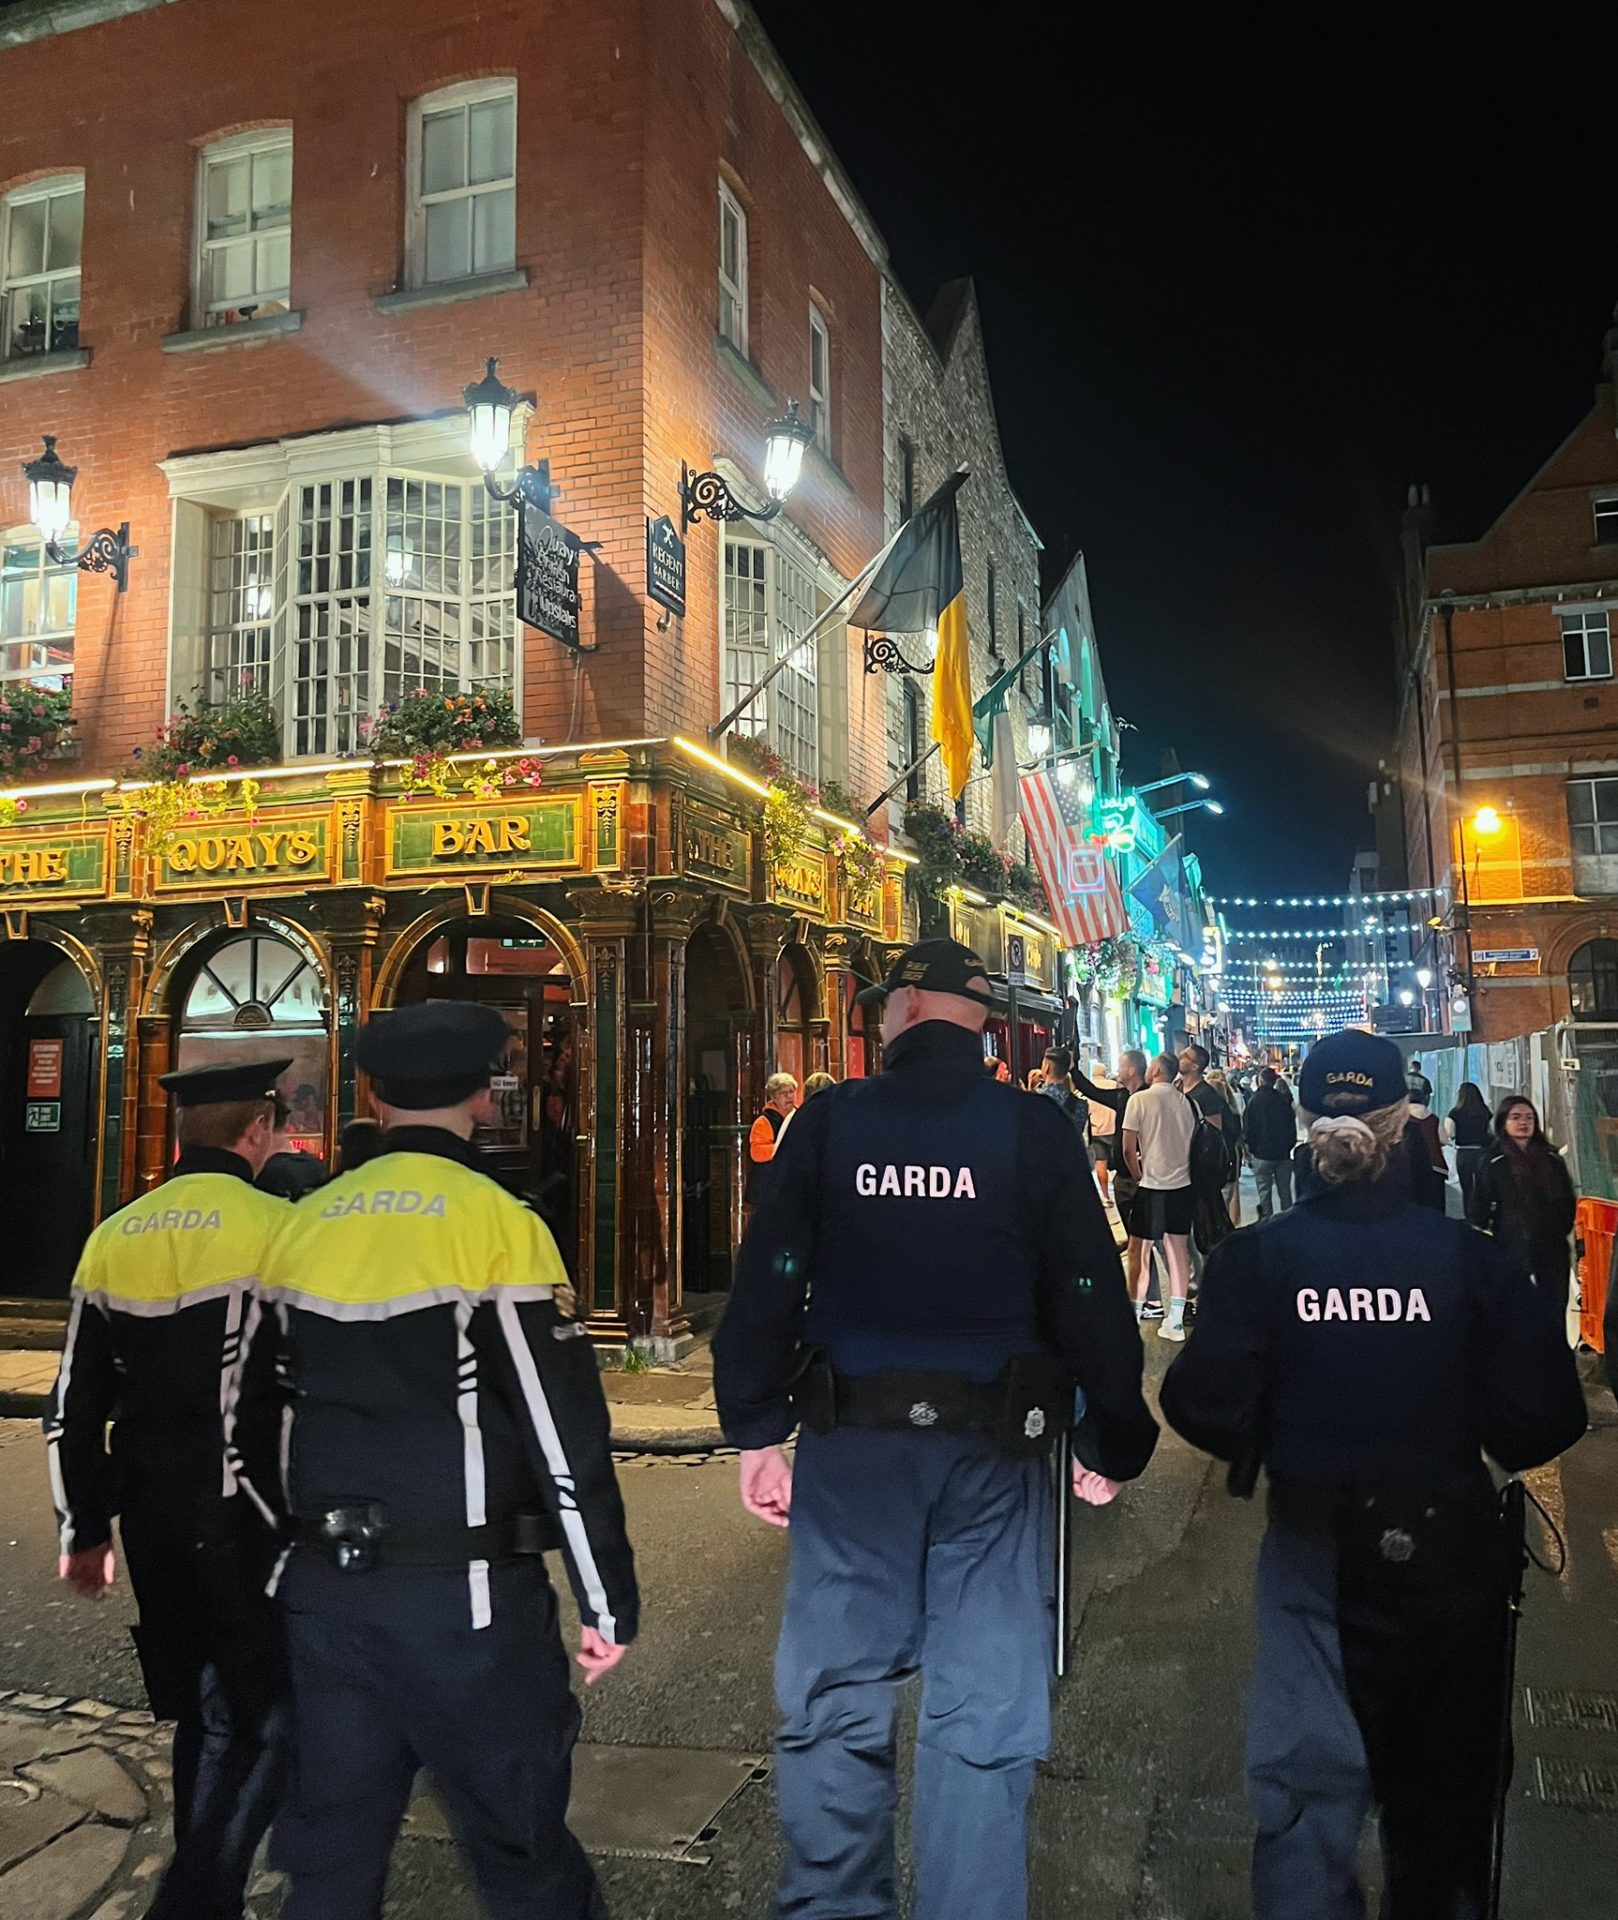 Gardaí on patrol in Dublin's Temple Bar